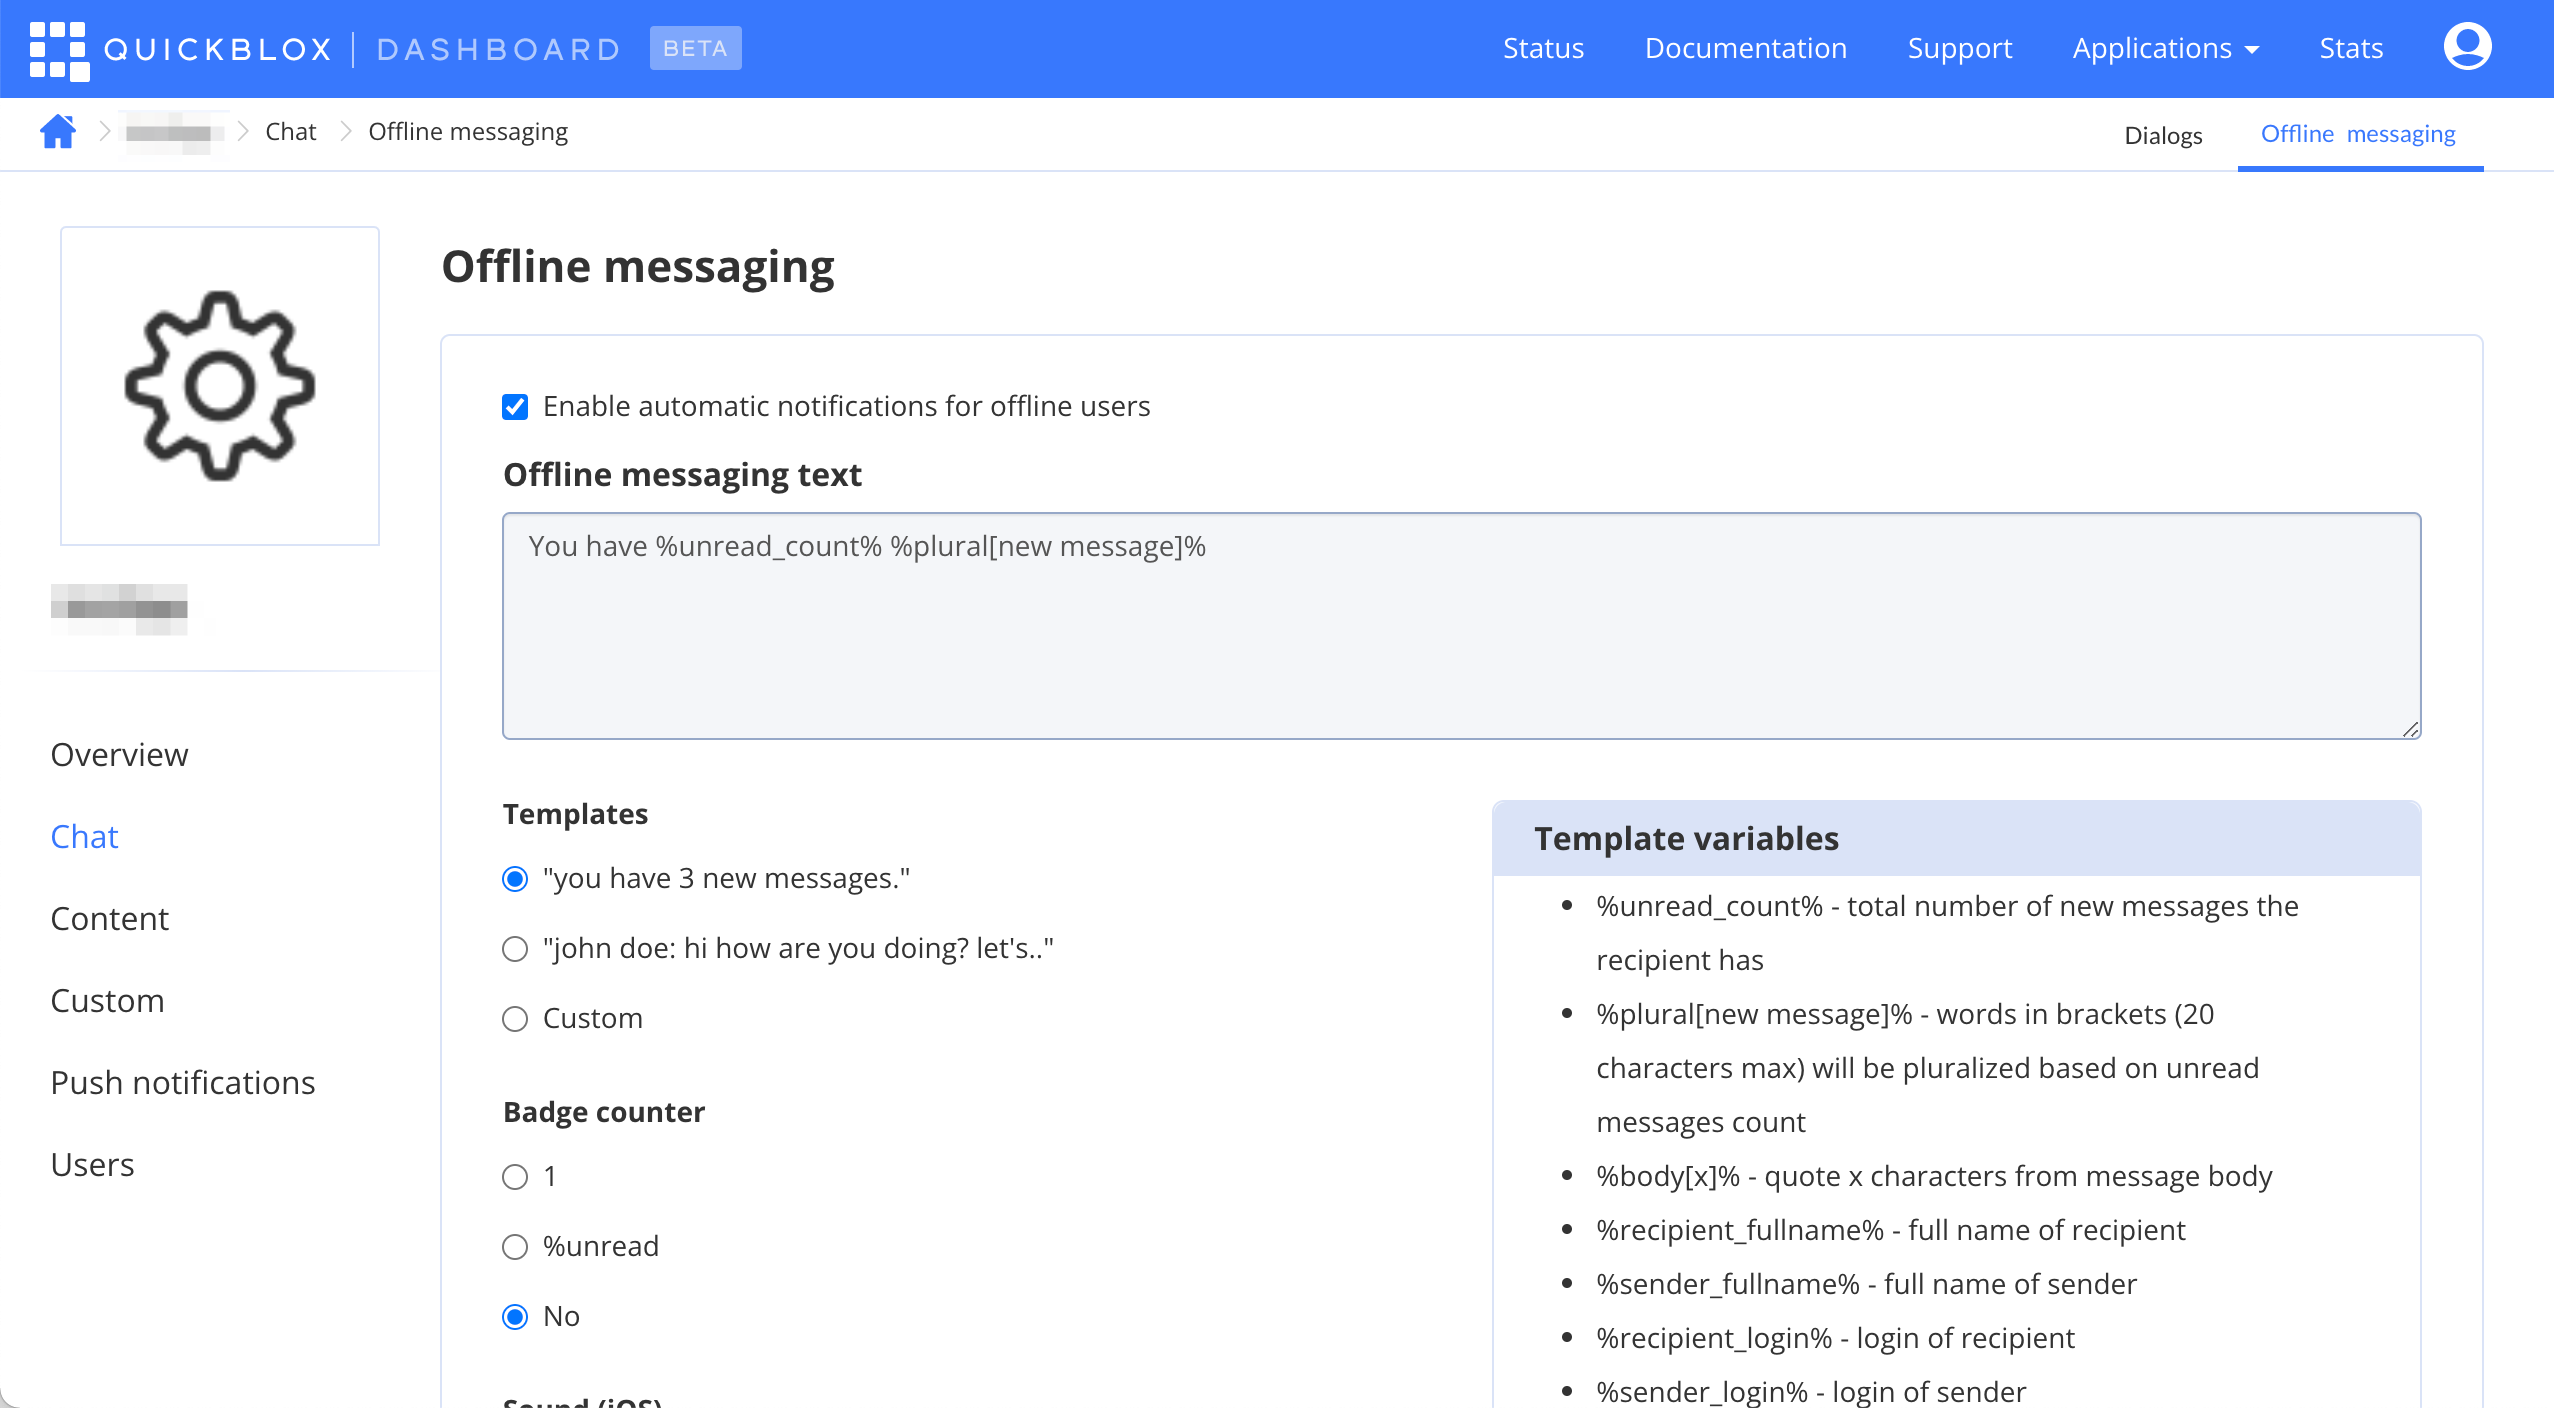 cat-offline messaging page on QuickBlox dashboard